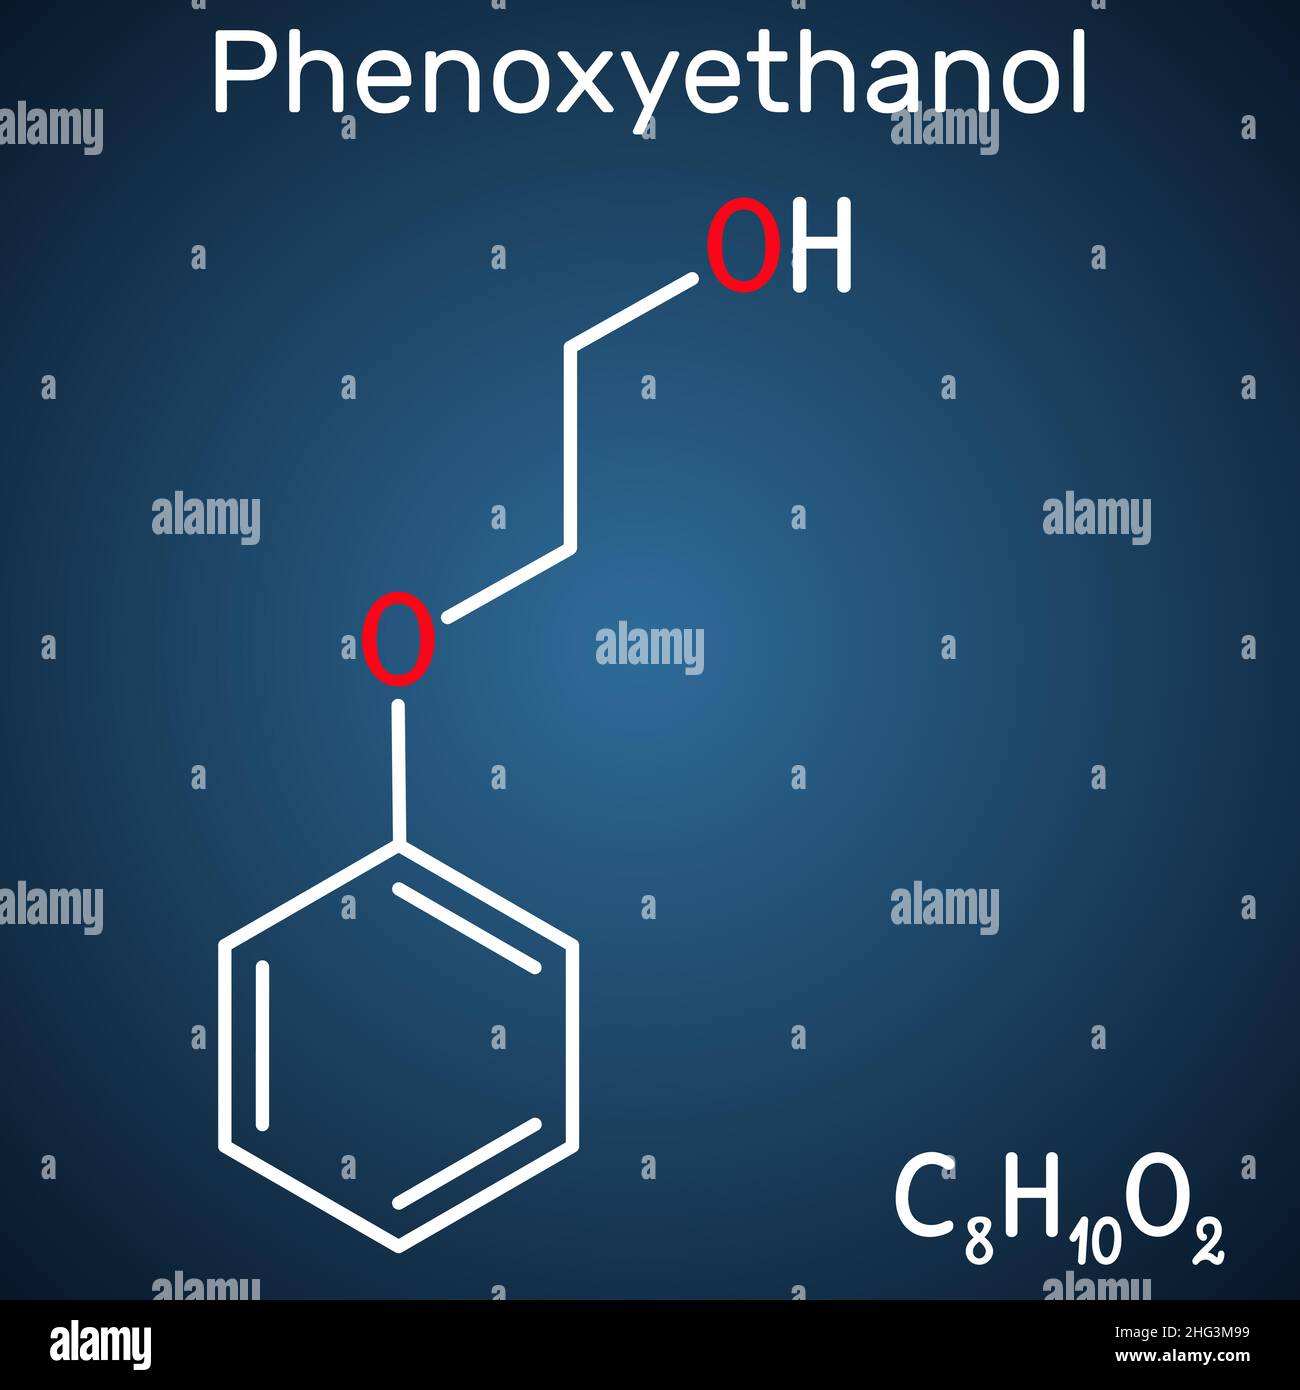 48 Phenoxyethanol Images, Stock Photos, 3D objects, & Vectors